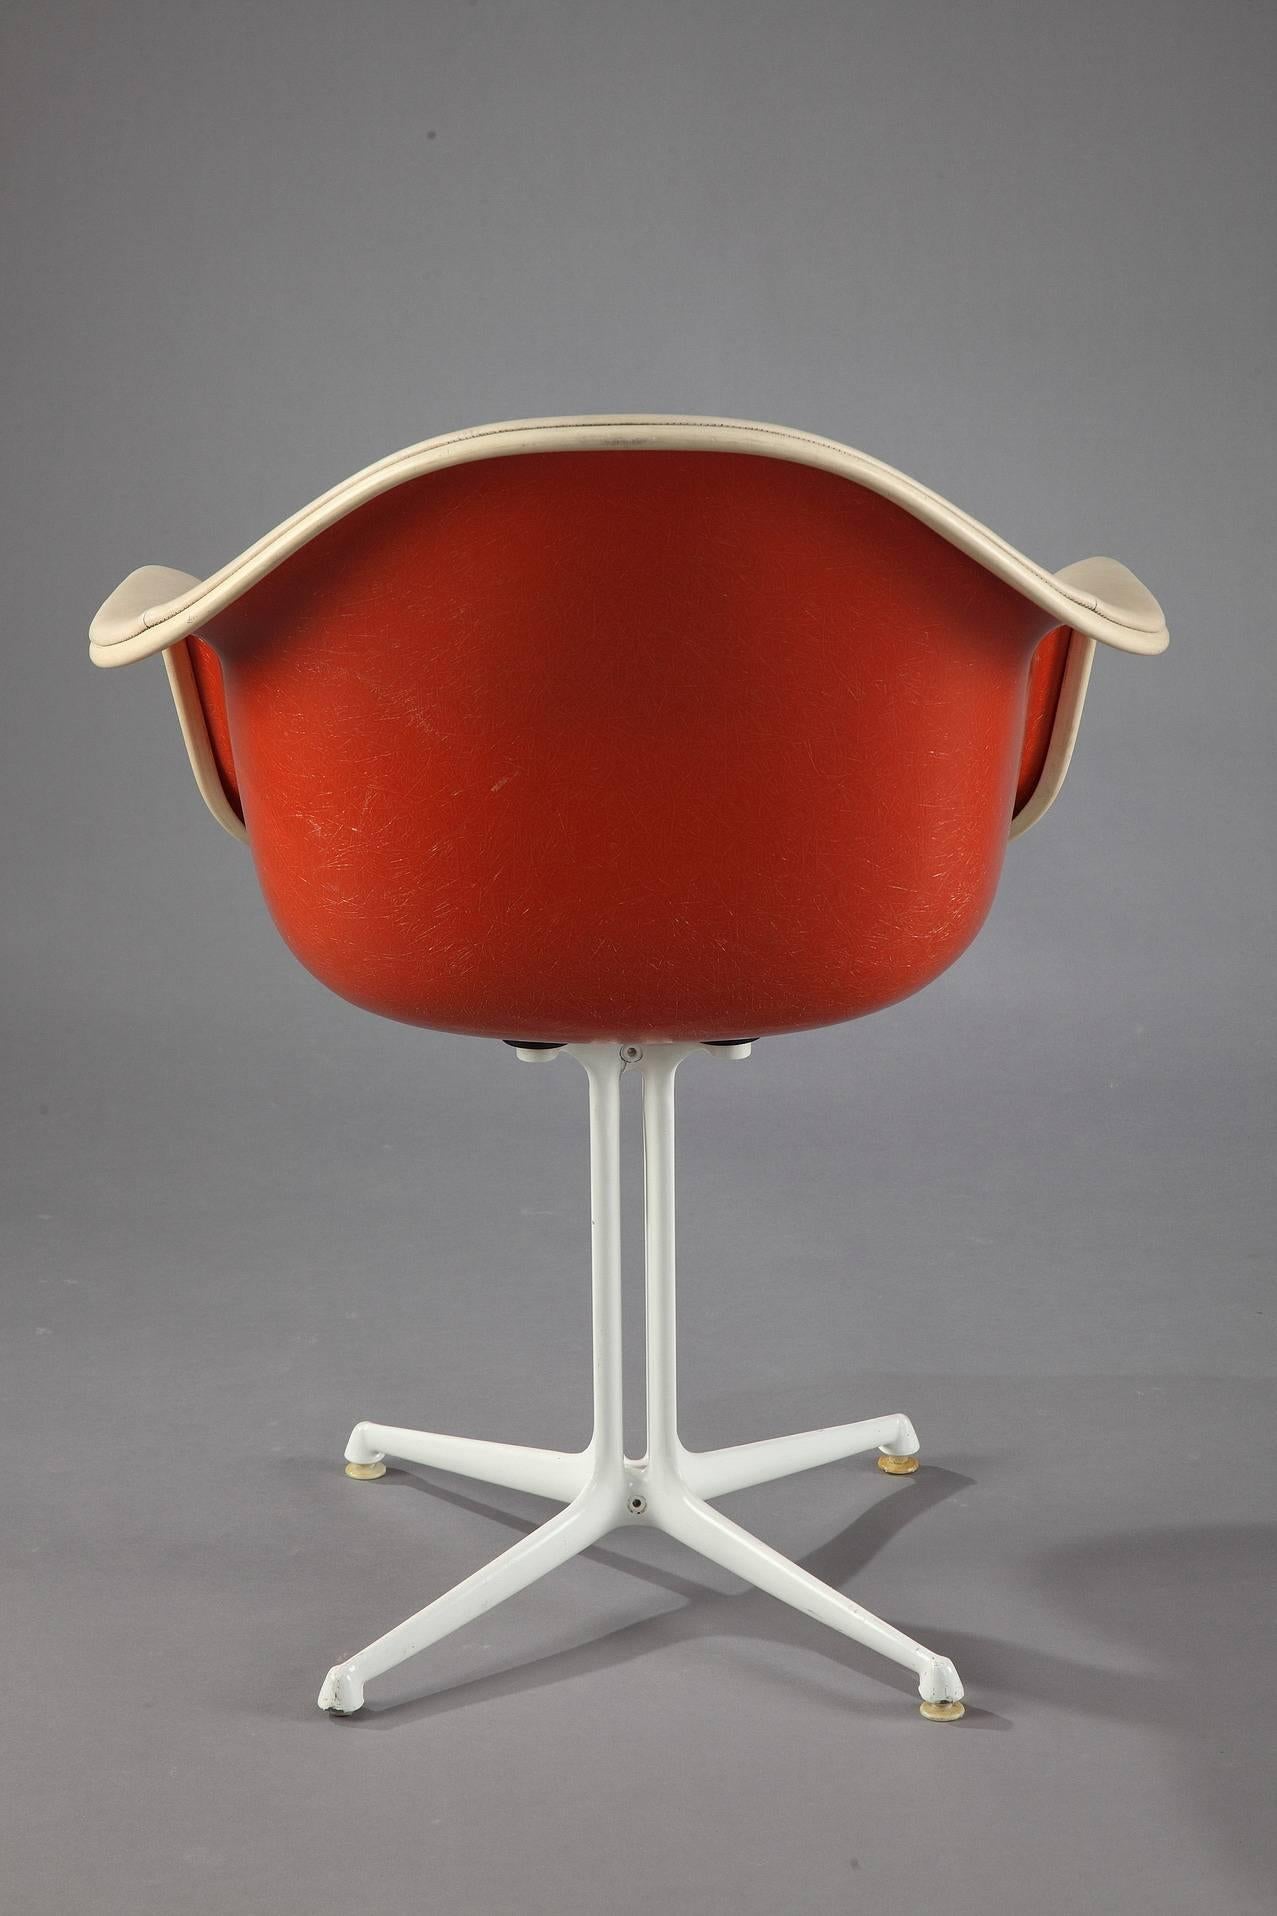 Rare Pair of La Fonda Chairs by Charles and Ray Eames 1